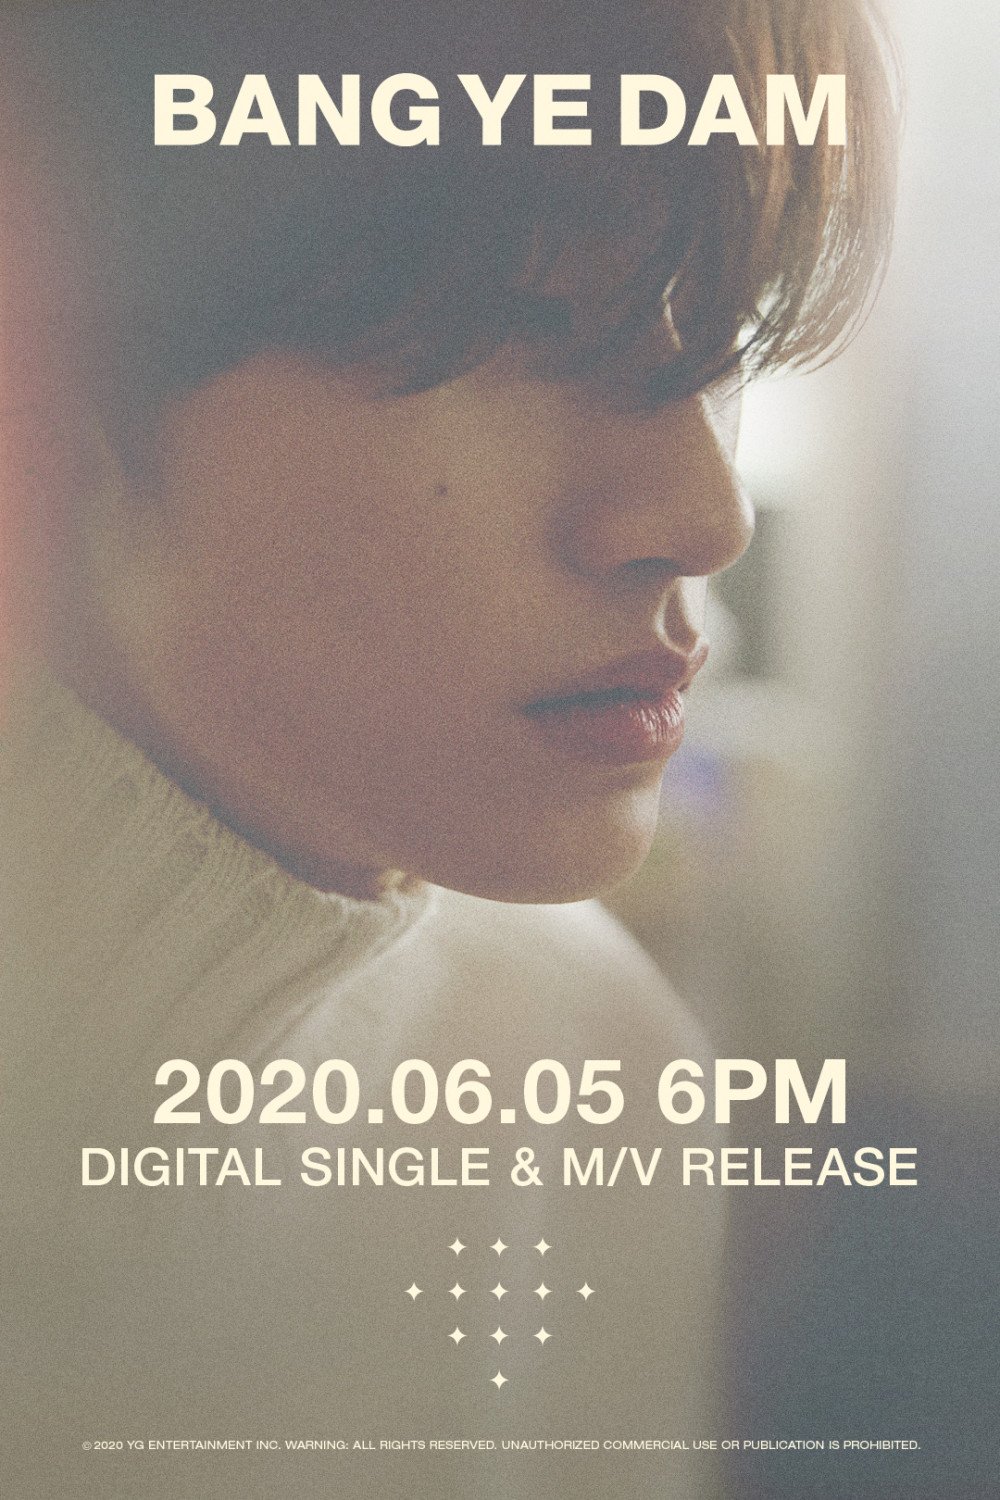 treasure-bang-ye-dam-reveals-moody-teaser-poster-for-solo-debut-single-1